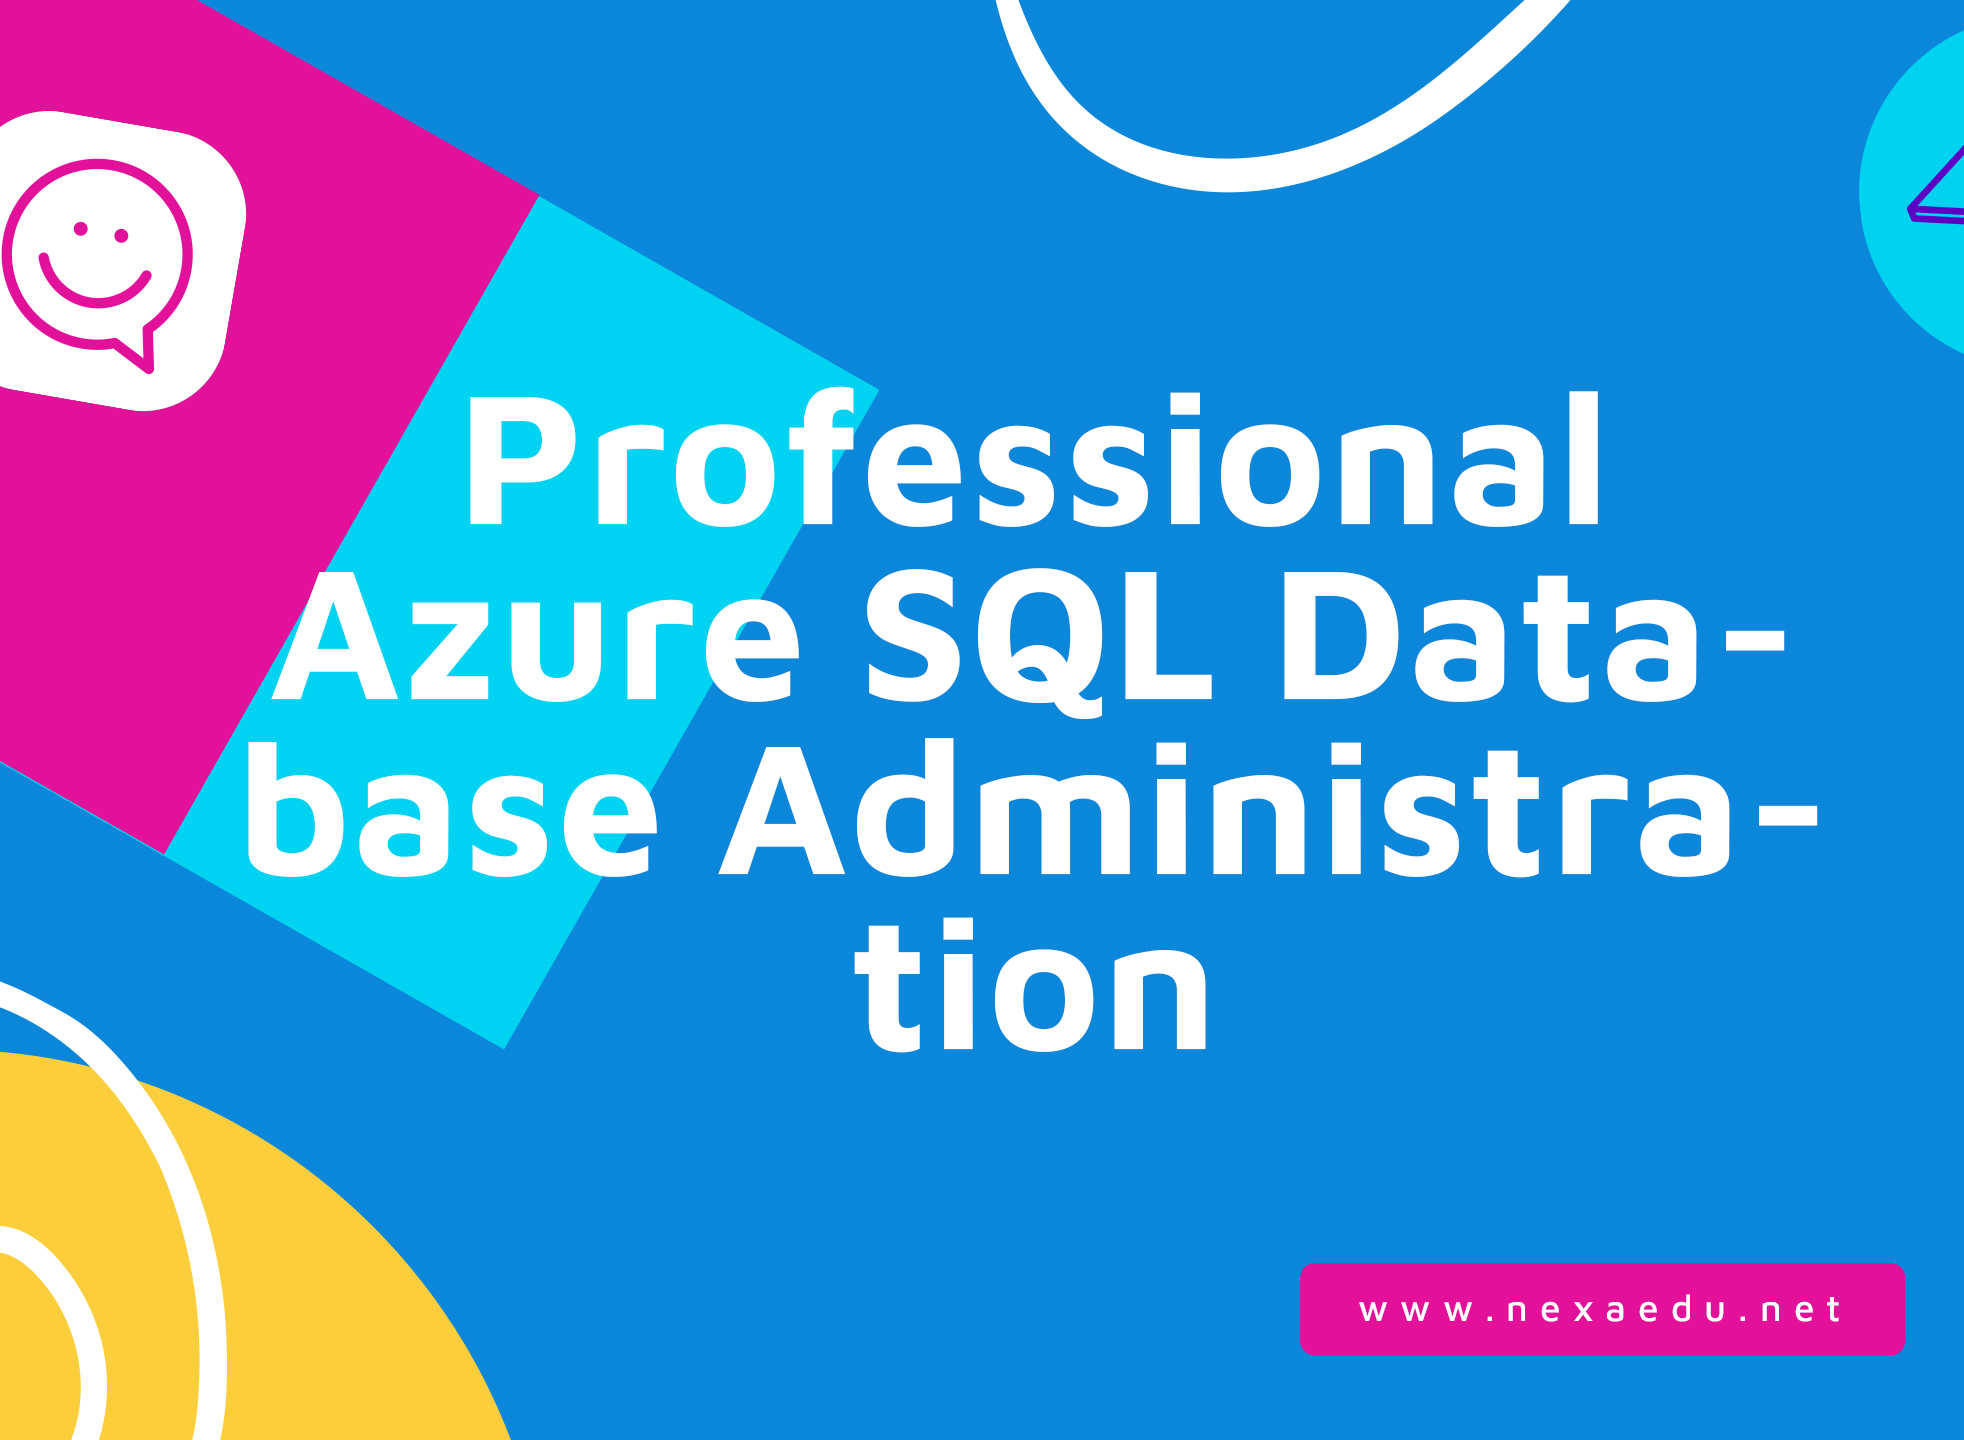 Professional Azure SQL Database Administration